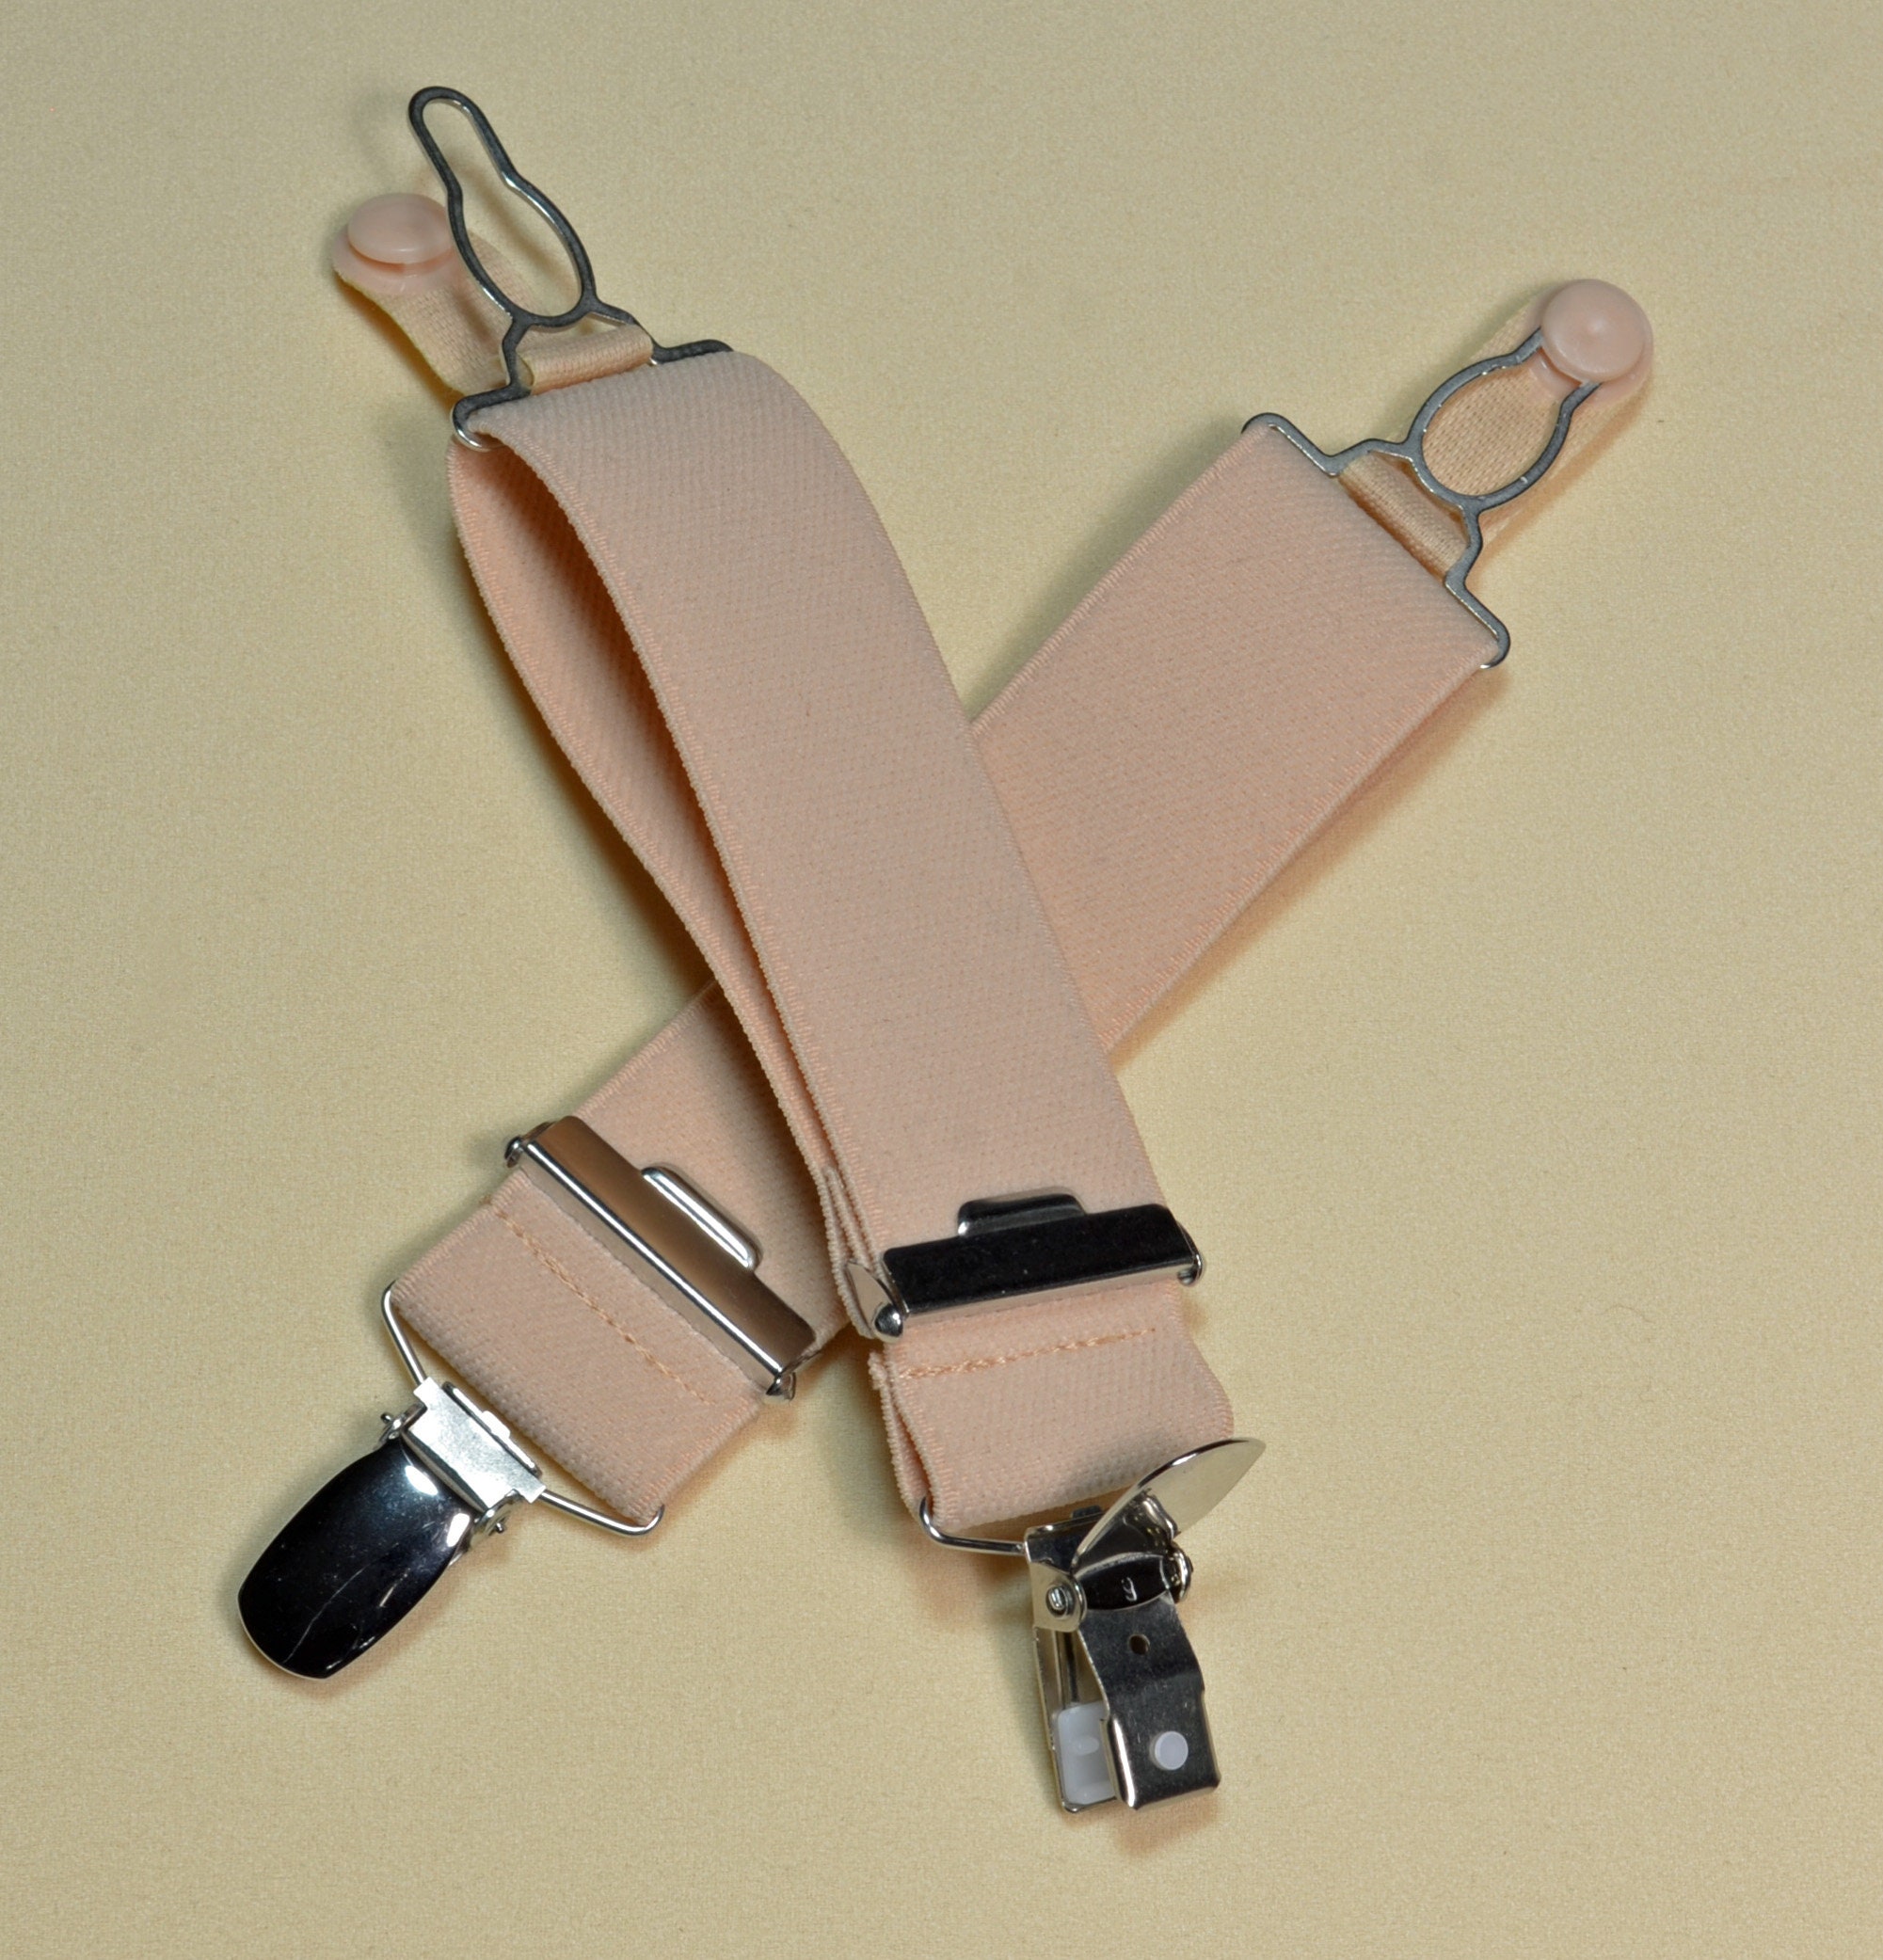 Straps Adjustable Suspenders With Both Sides Suspender Clip, 3cm